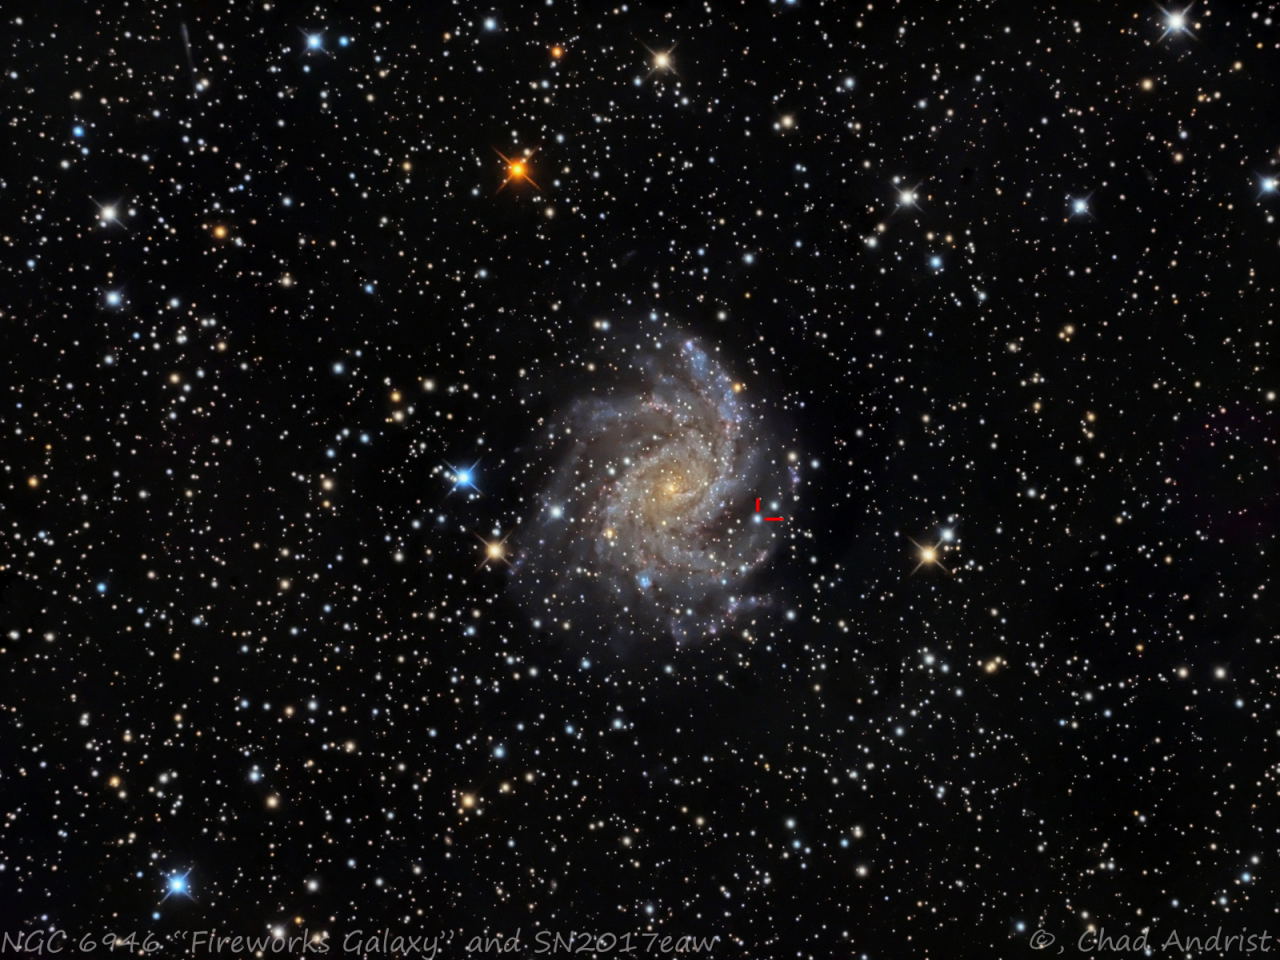 NGC 6946 - Fireworks Galaxy and Supernova SN2017eaw